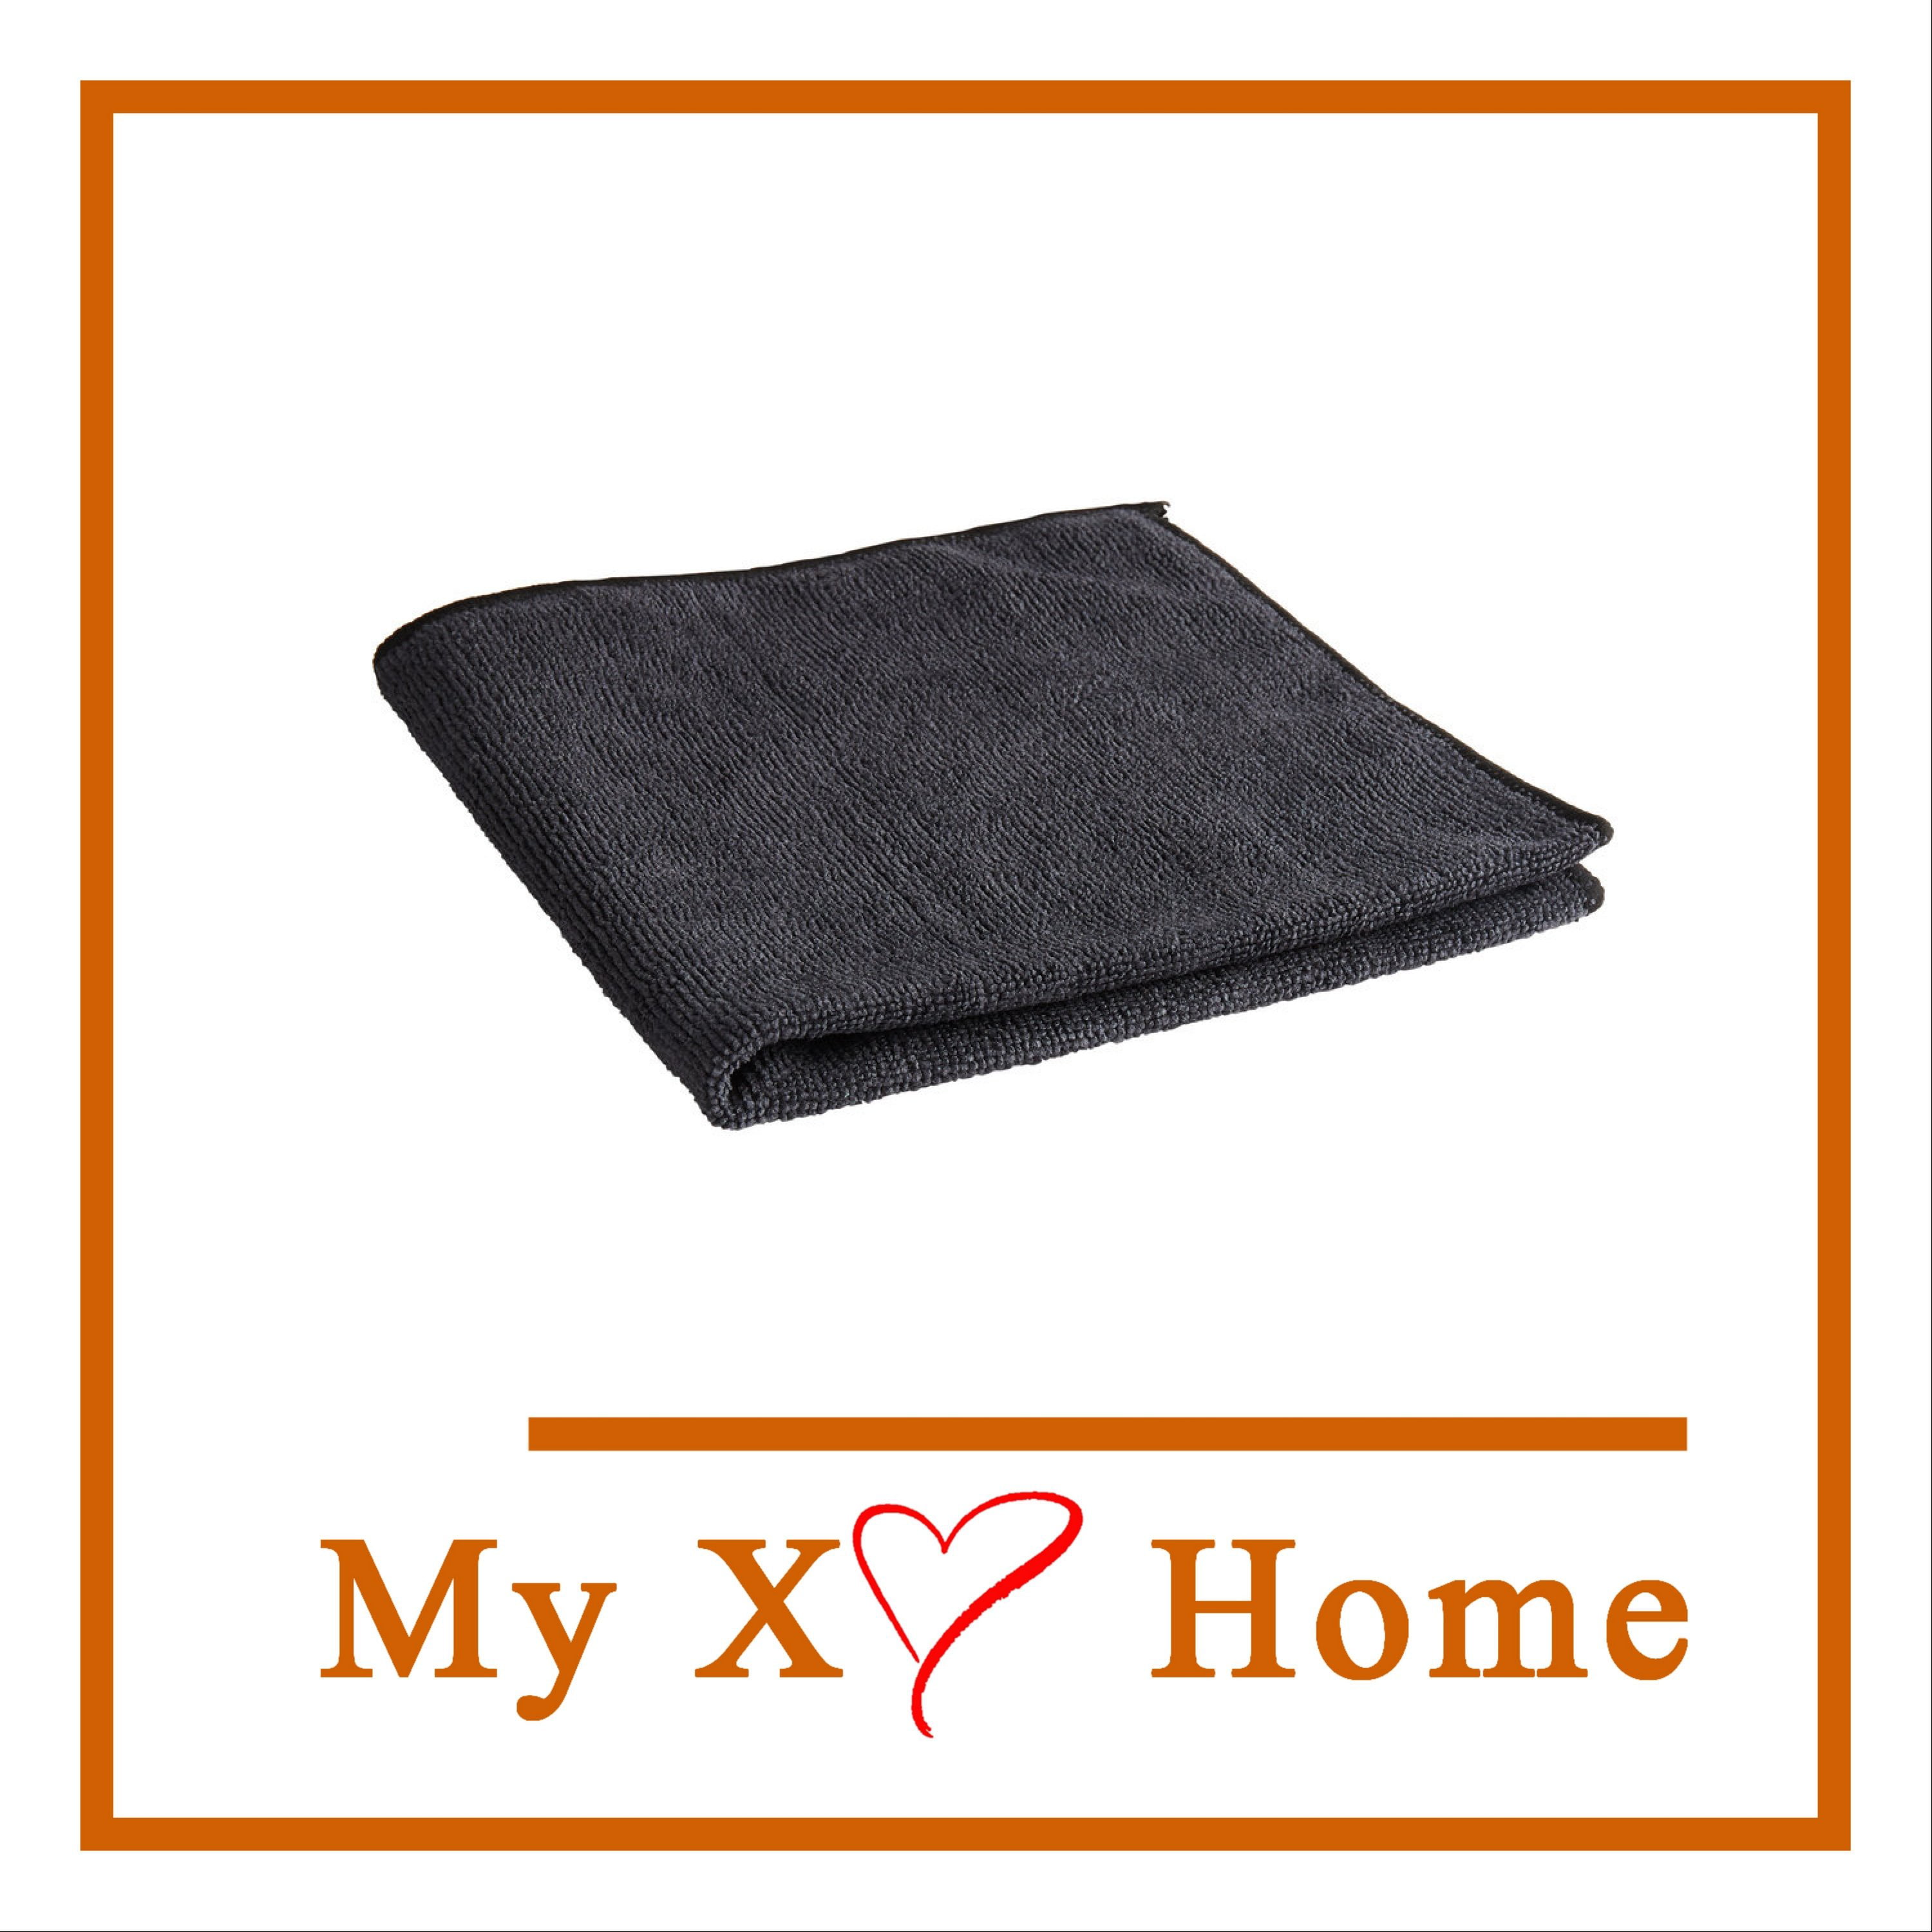 16 x 16 Black Microfiber Towel by MyXOHome 